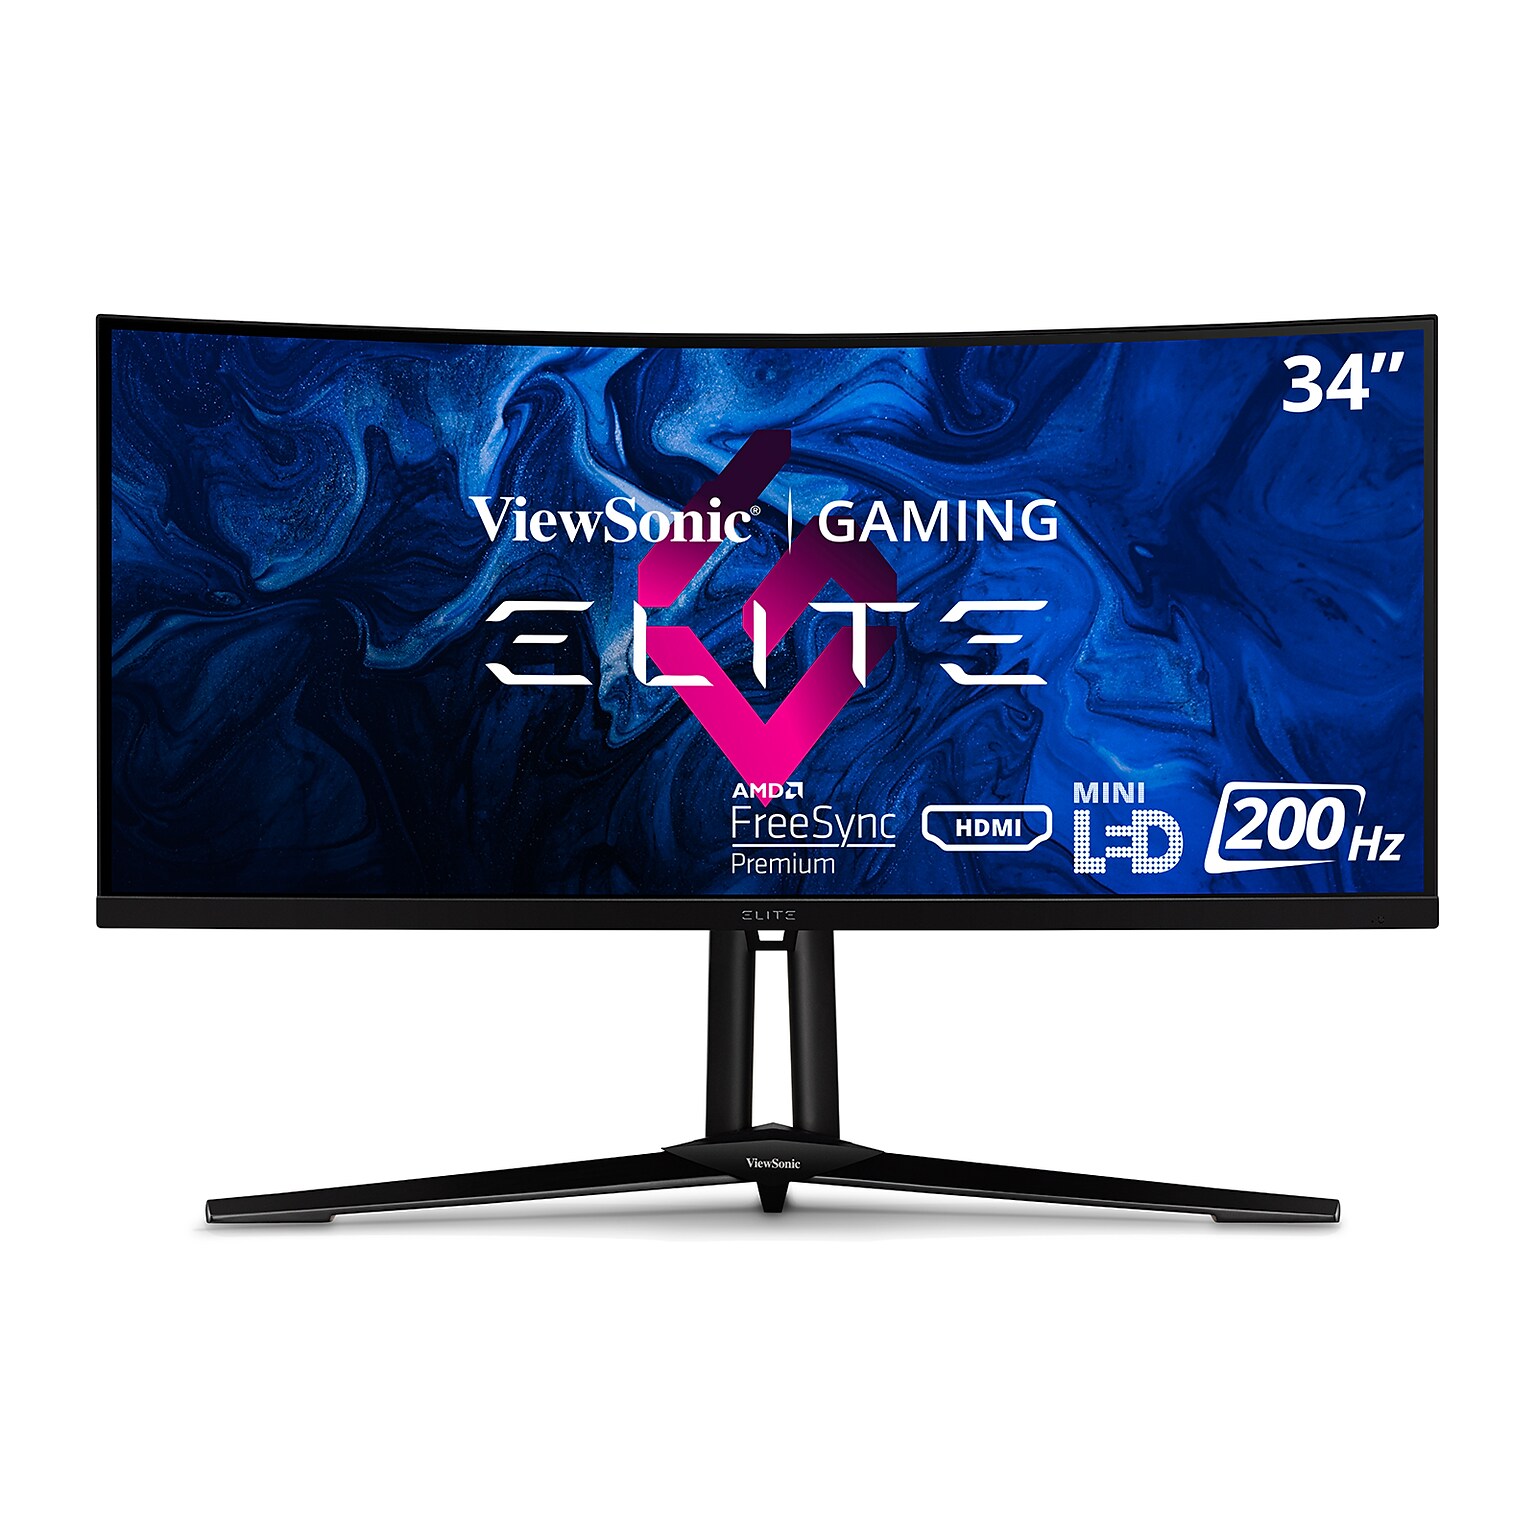 ViewSonic ELITE 34 Curved 200 Hz LED Gaming Monitor, Black (XG341C-2K)